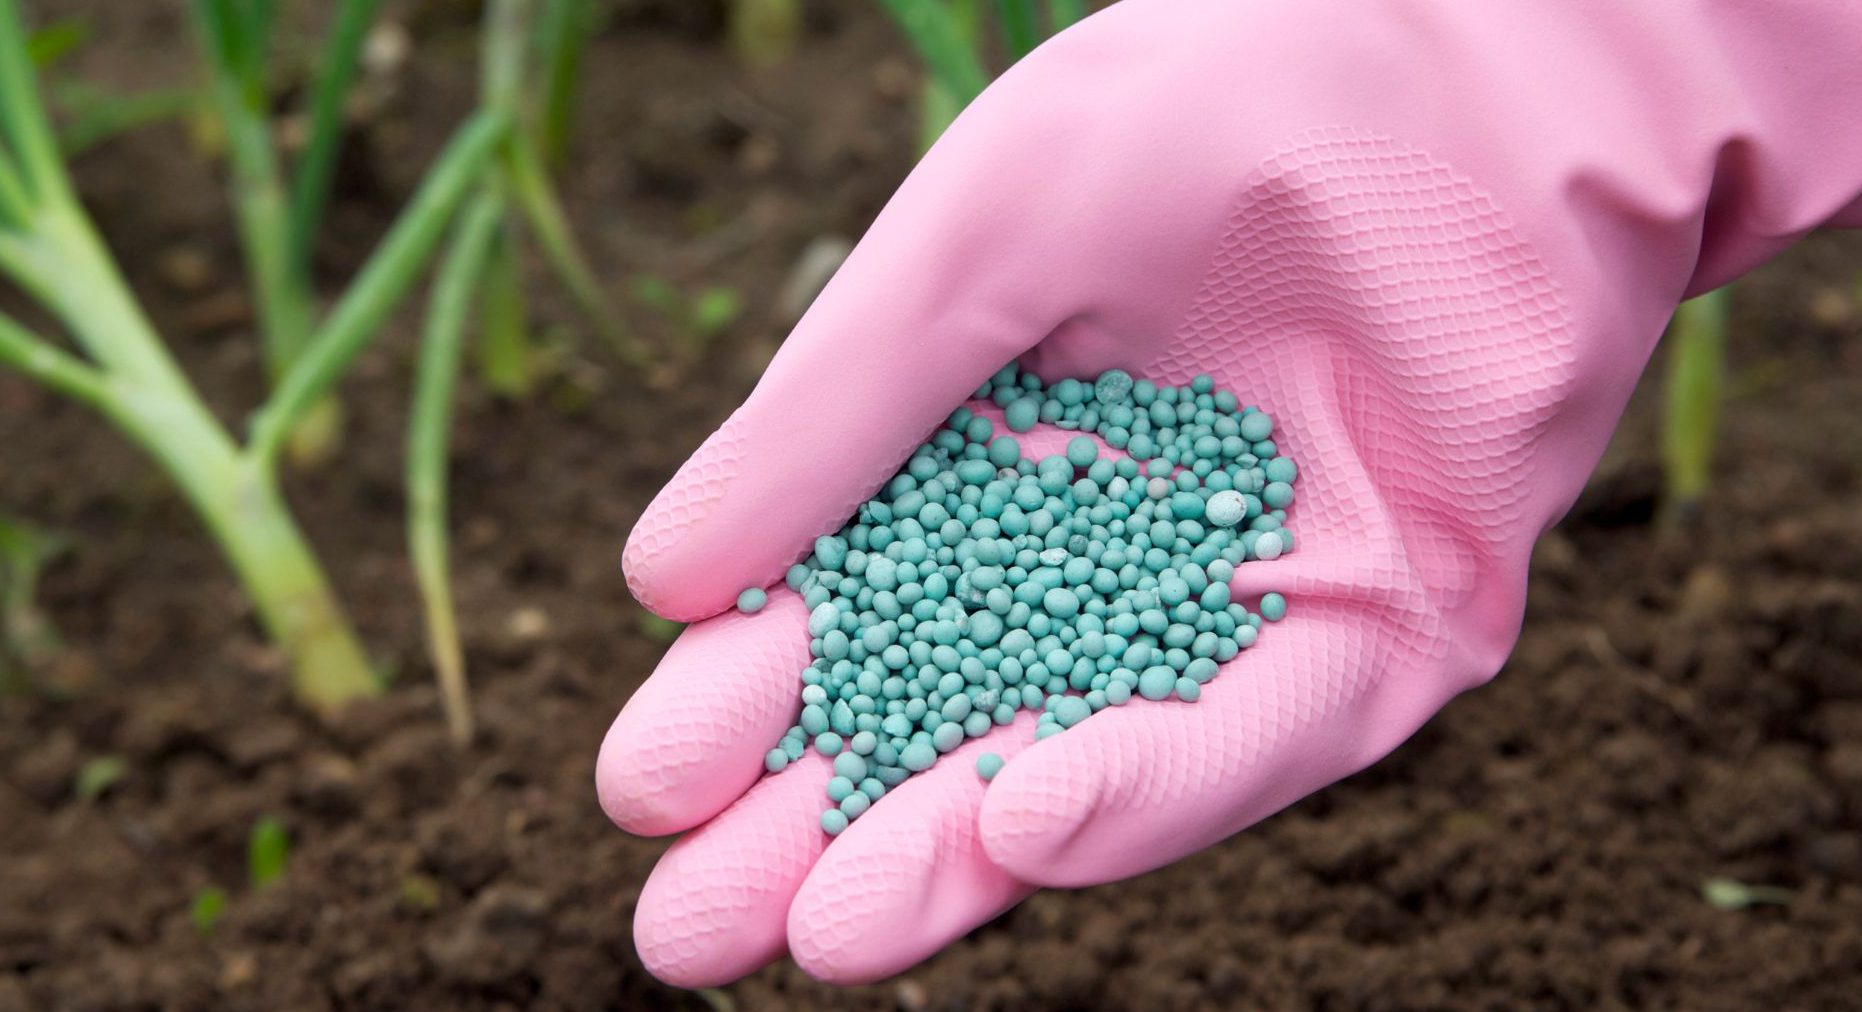 Catalyst Fertilizer Global Market Report